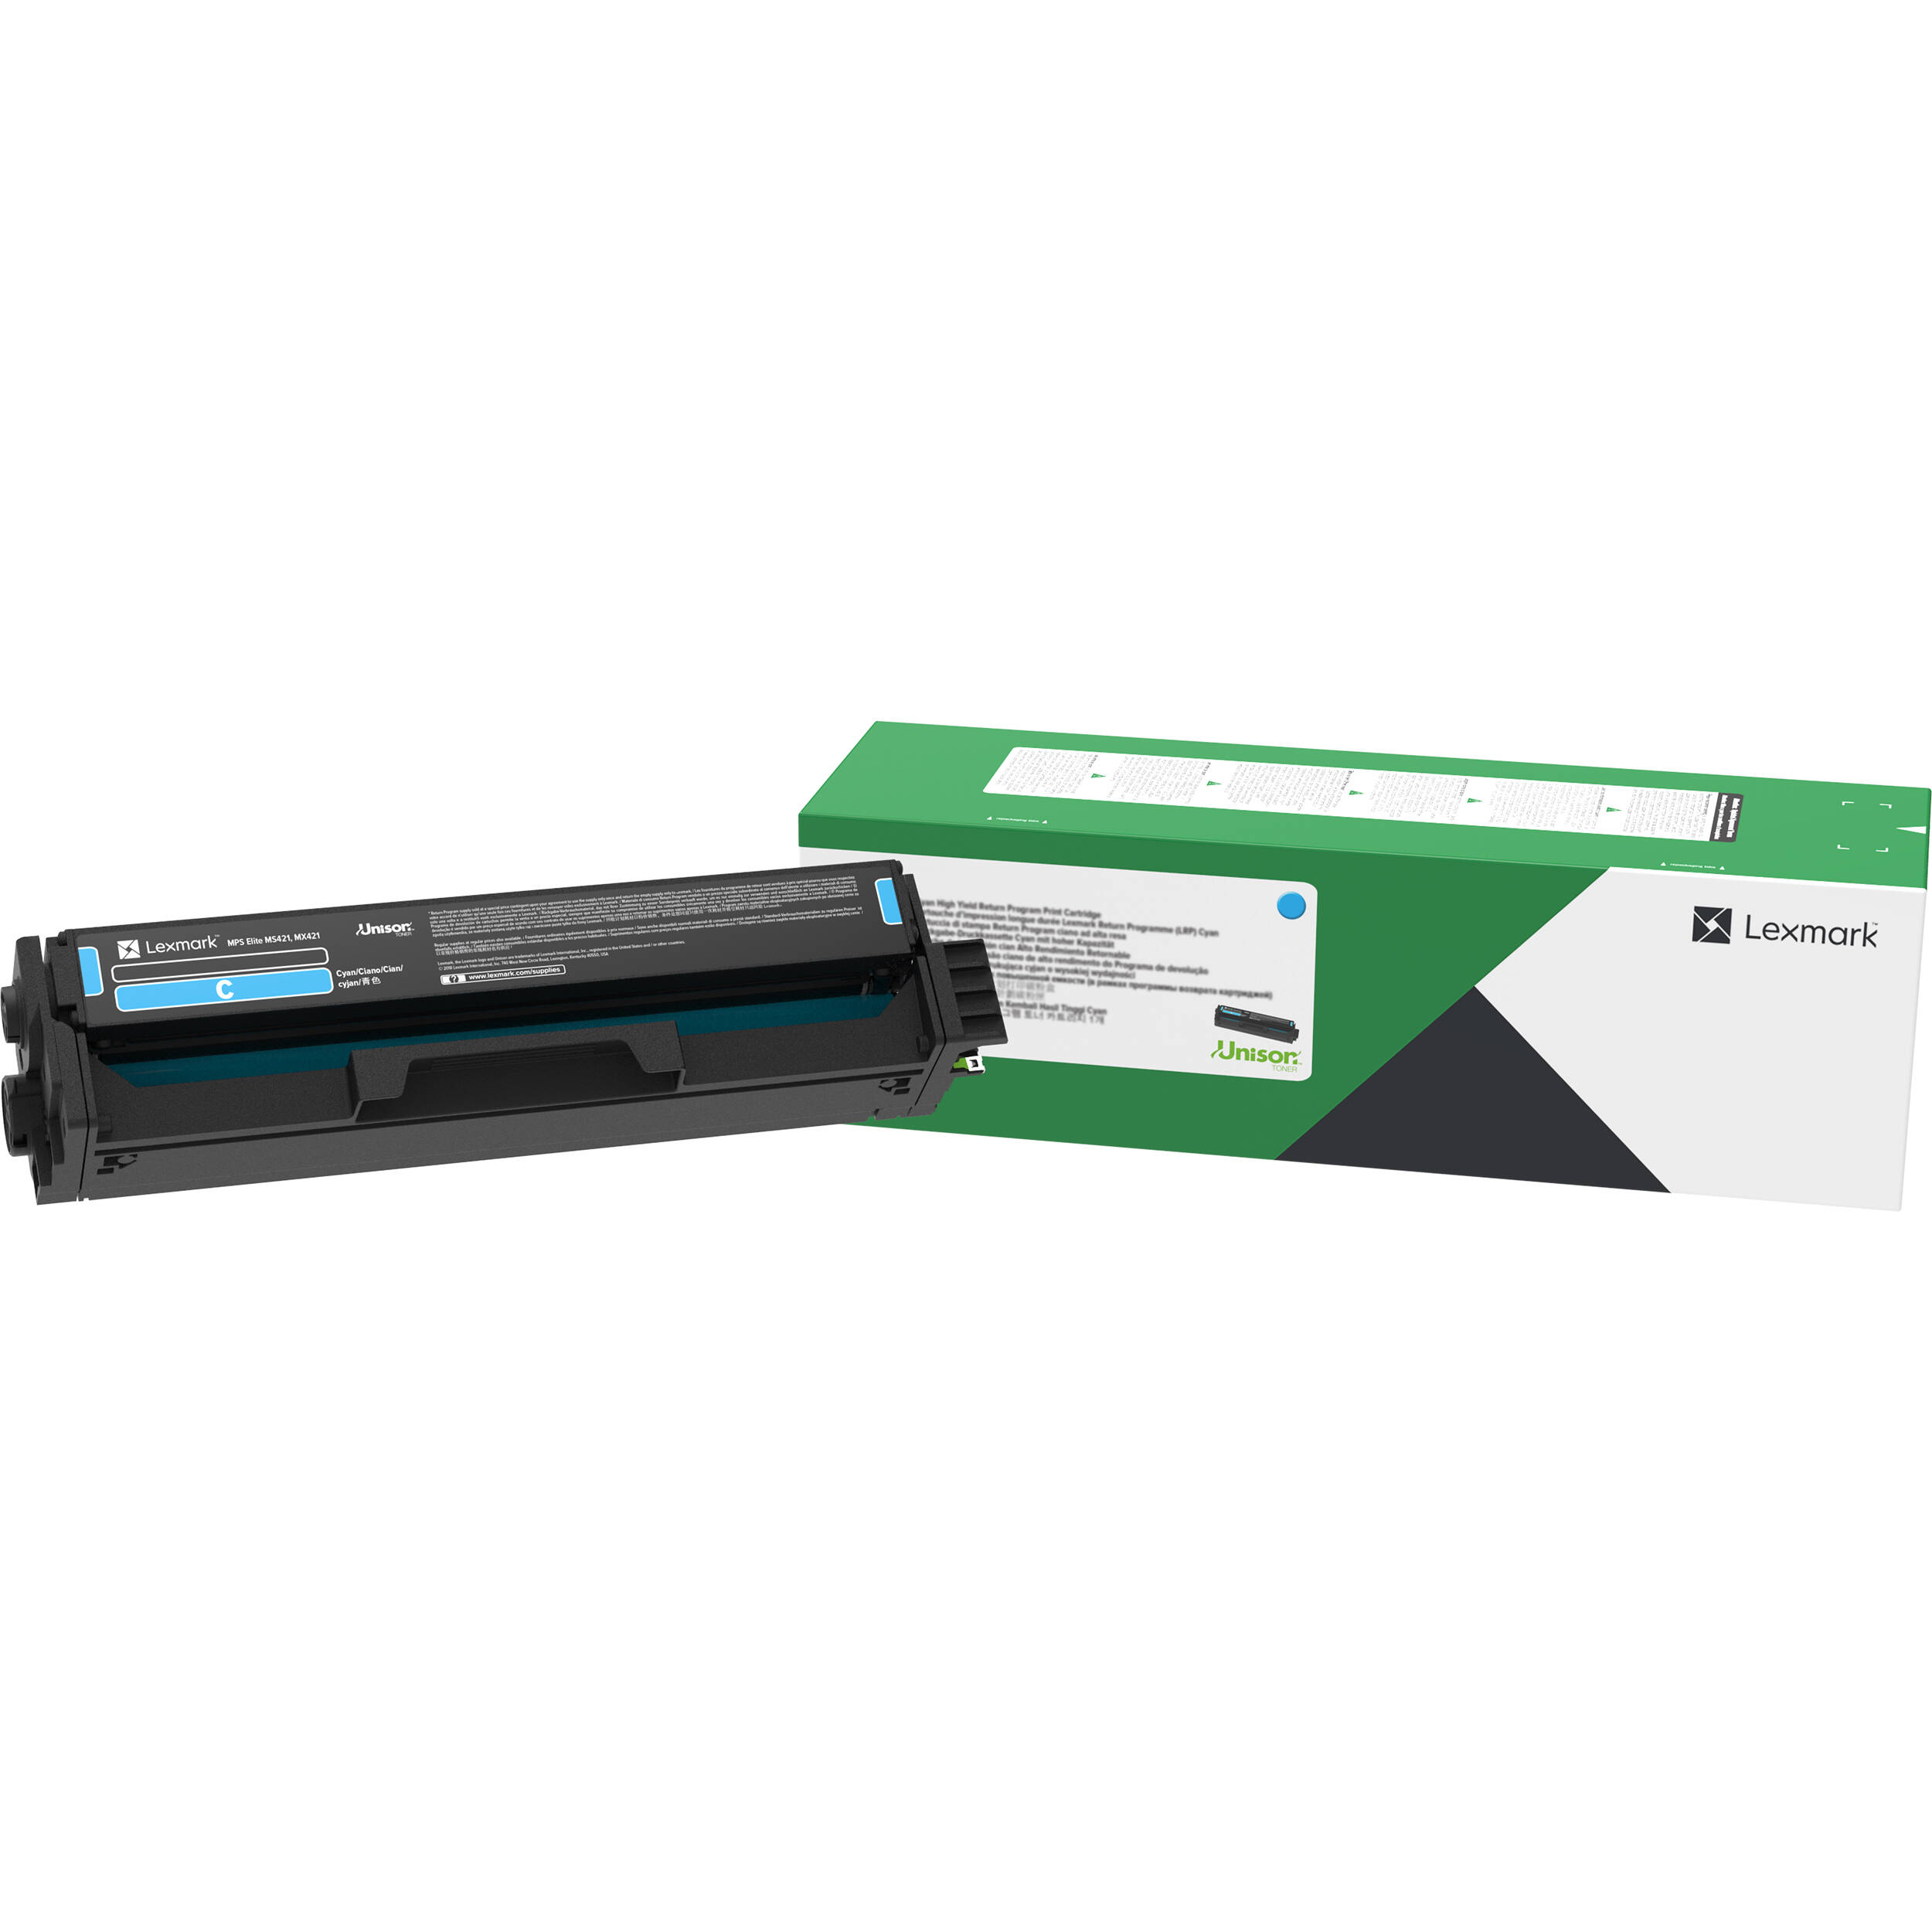 Lexmark 20N10C0 Cyan Return Program Toner Cartridge for Select Color Laser Printers